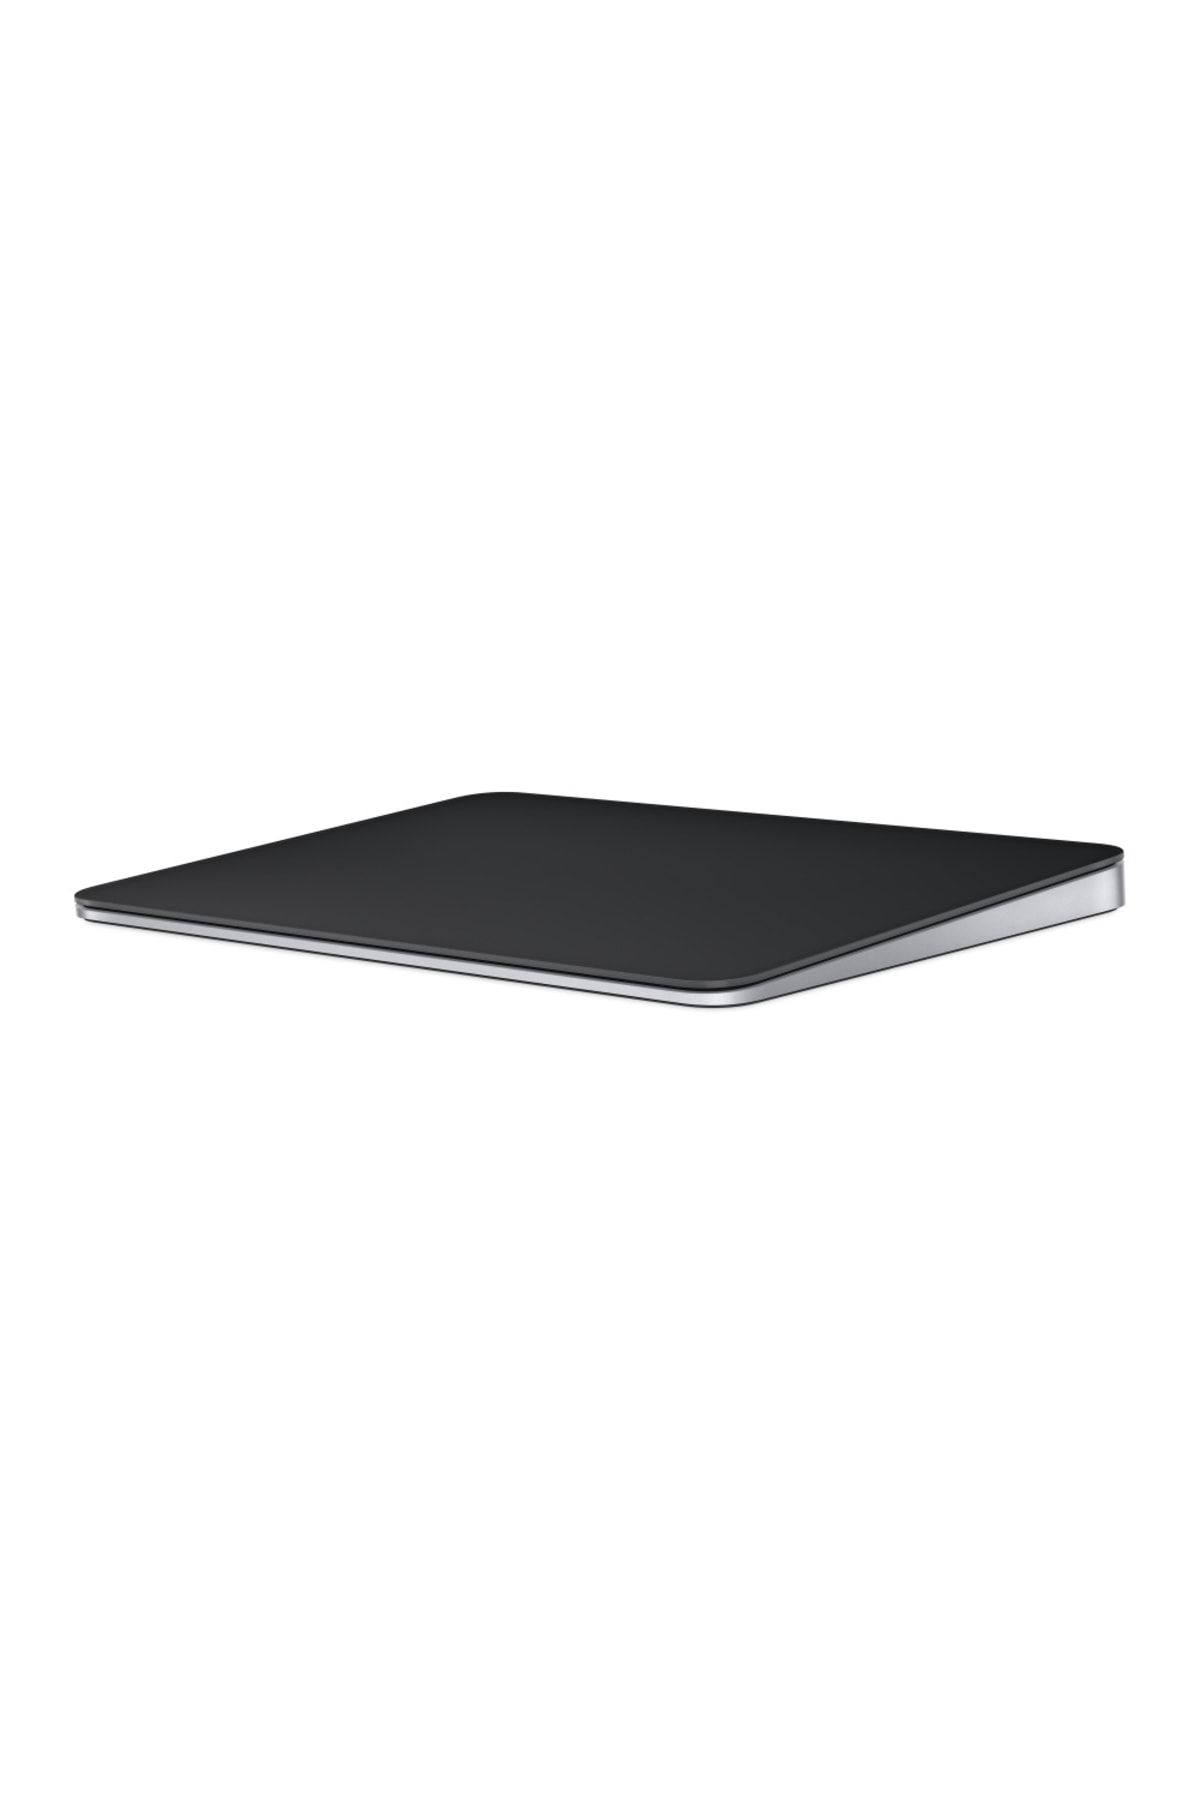 Apple Magic Trackpad Siyah Multi-touch Yüzey - Mmmp3tu/a